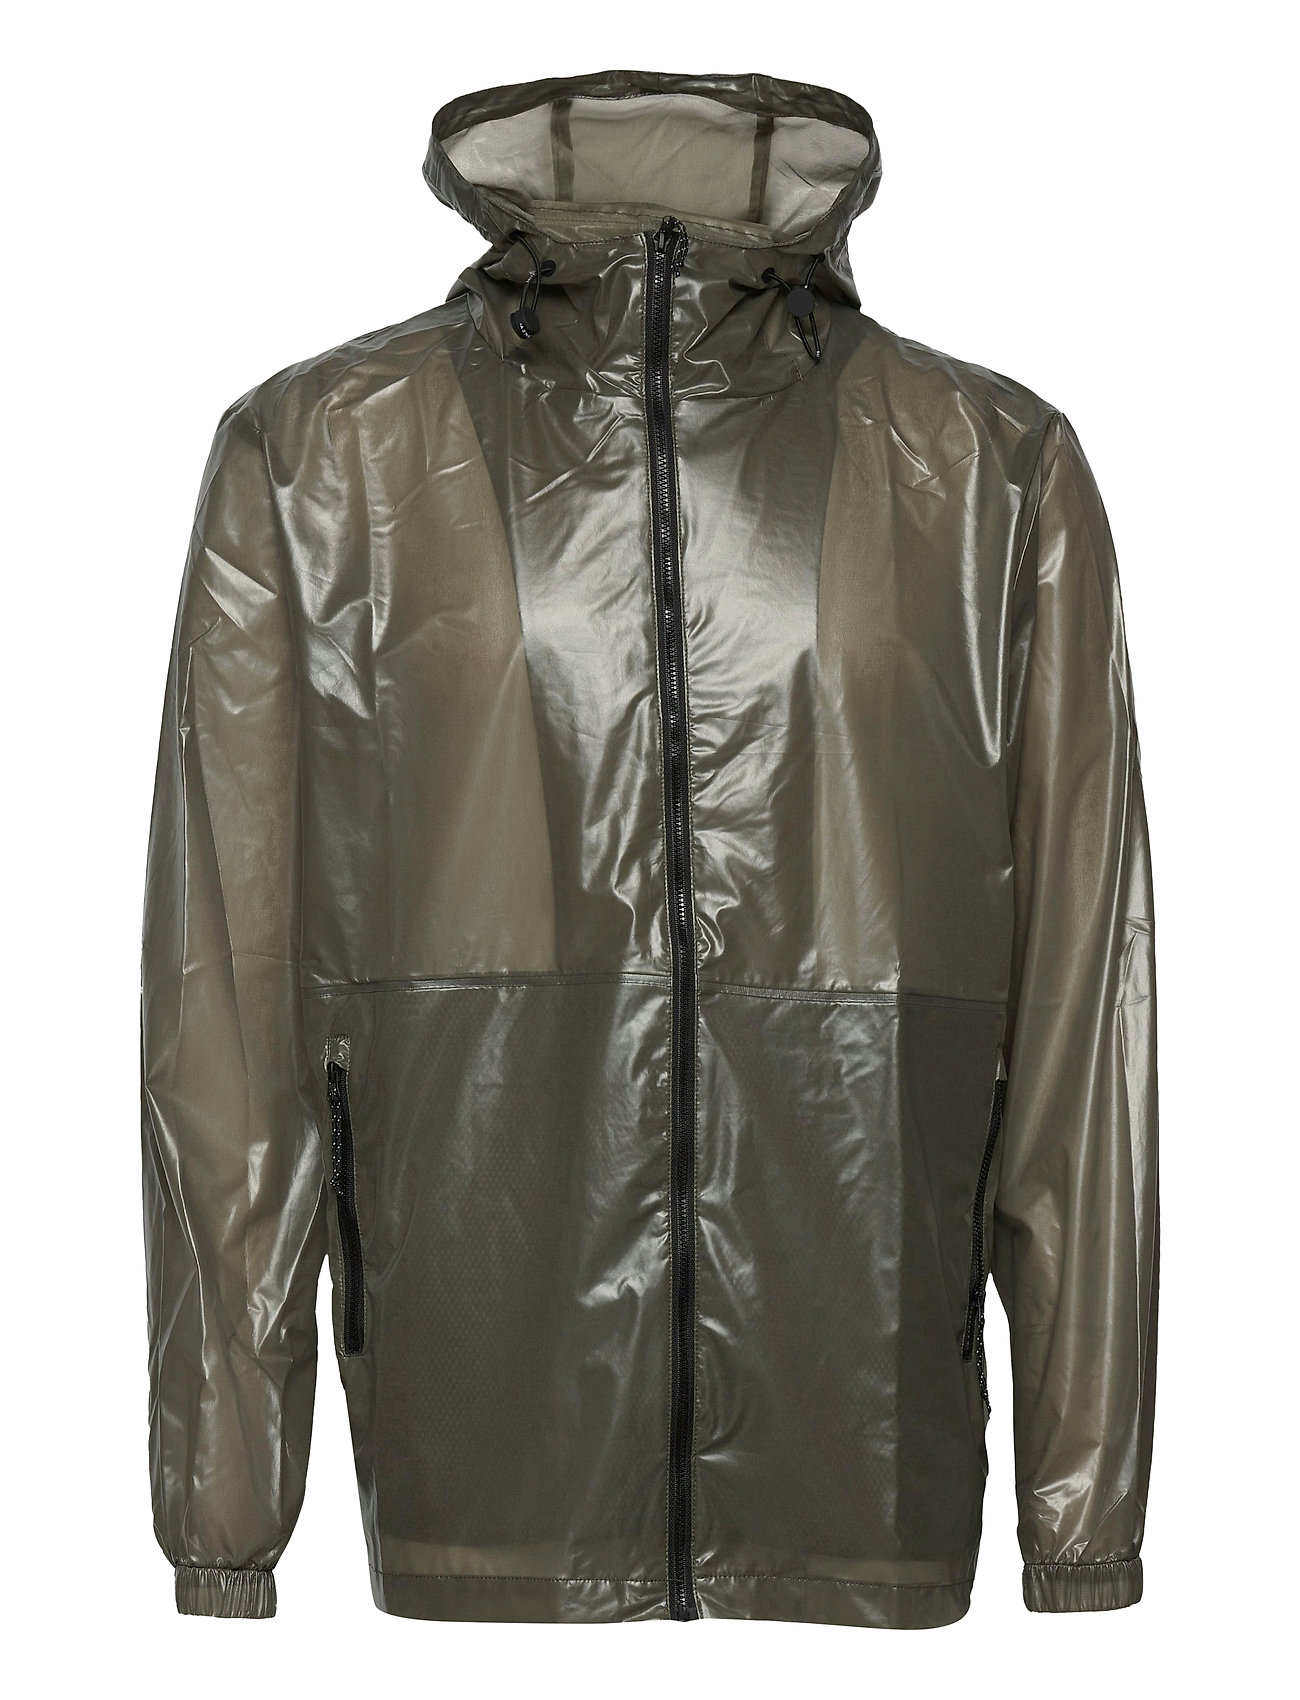 Ultralight Jacket Outerwear Rainwear Rain Coats Ruskea Rains